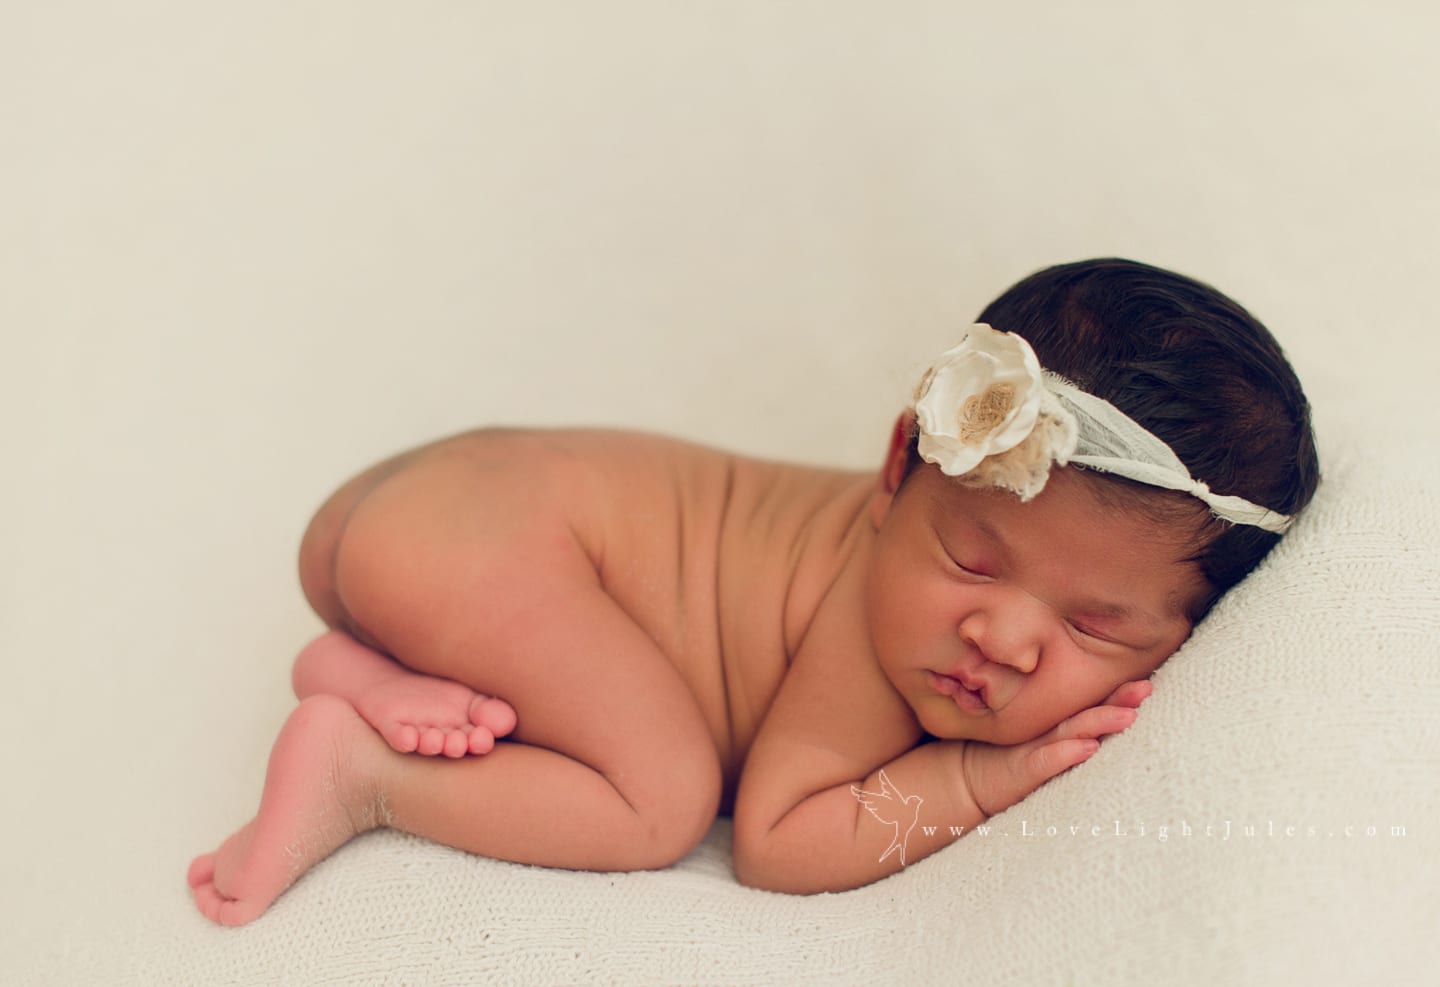 image-of-newborn-photo-session-on-cream-background-by-sacramento-photographer